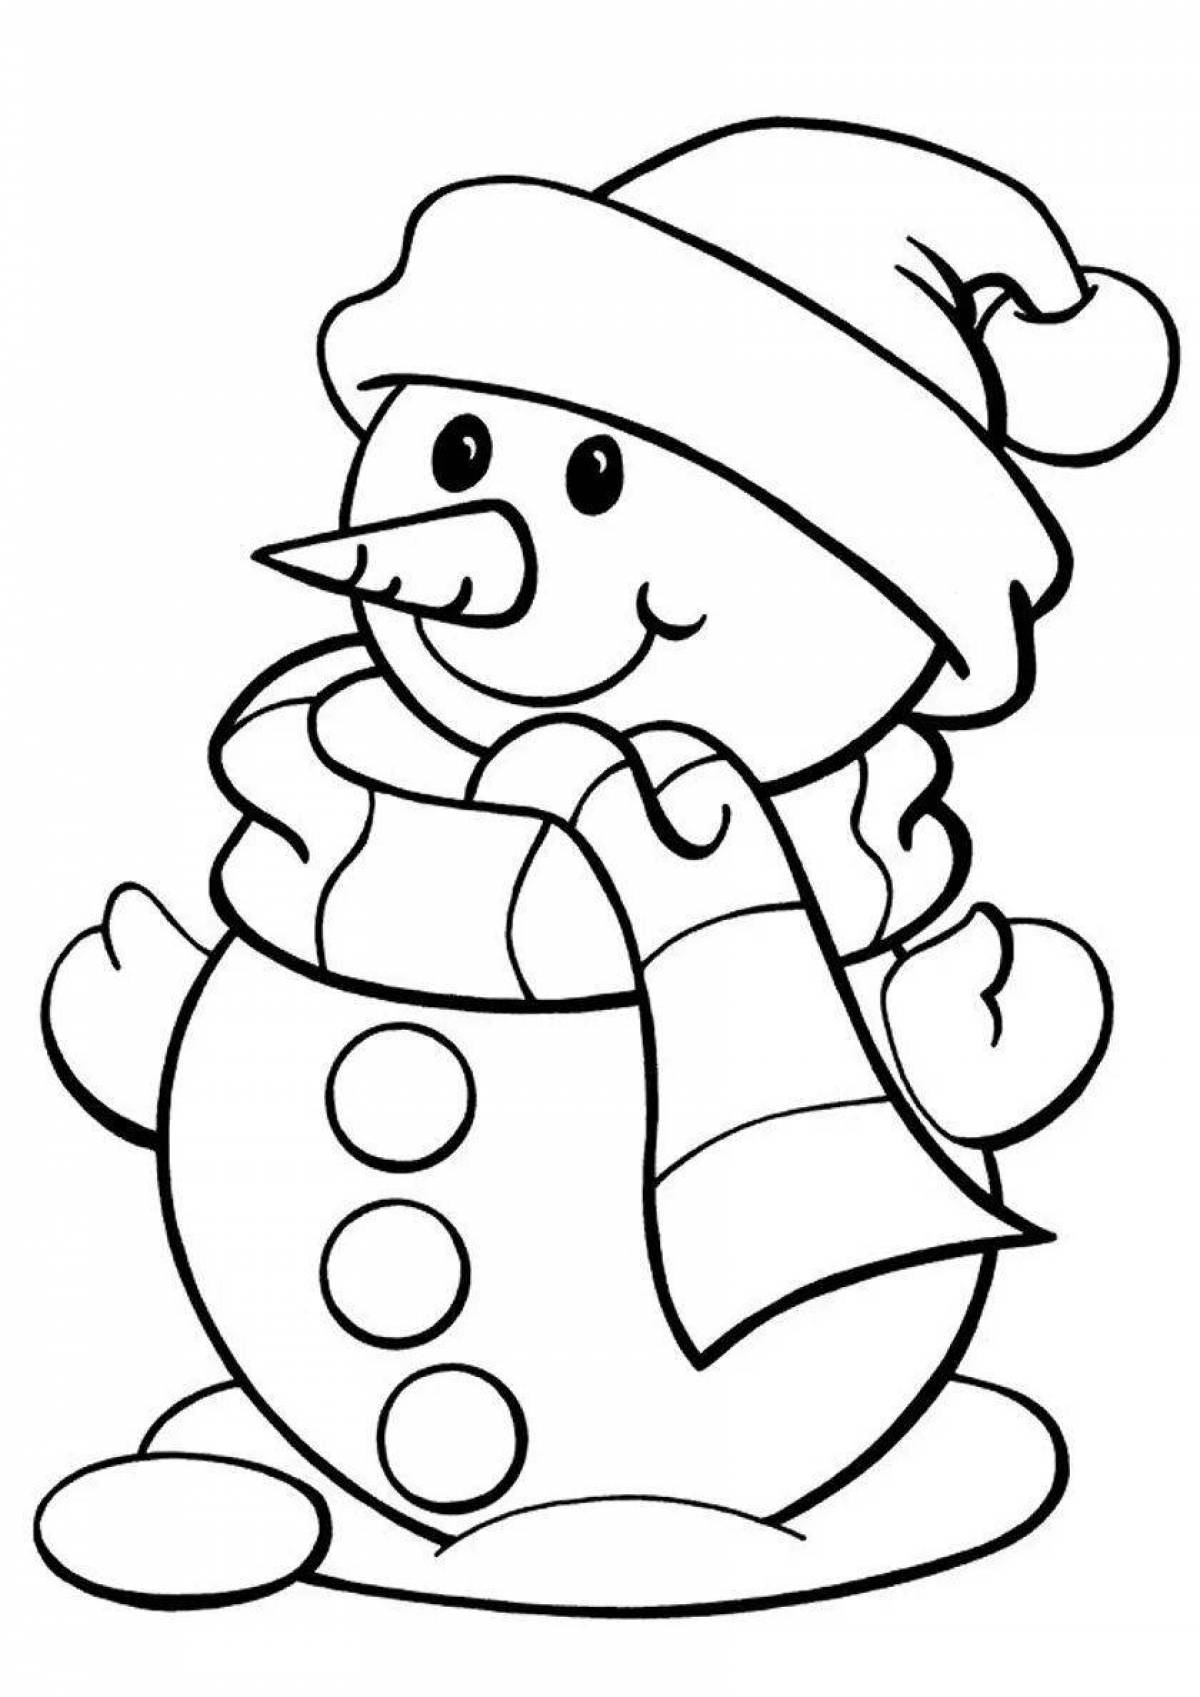 Bright children's coloring snowman